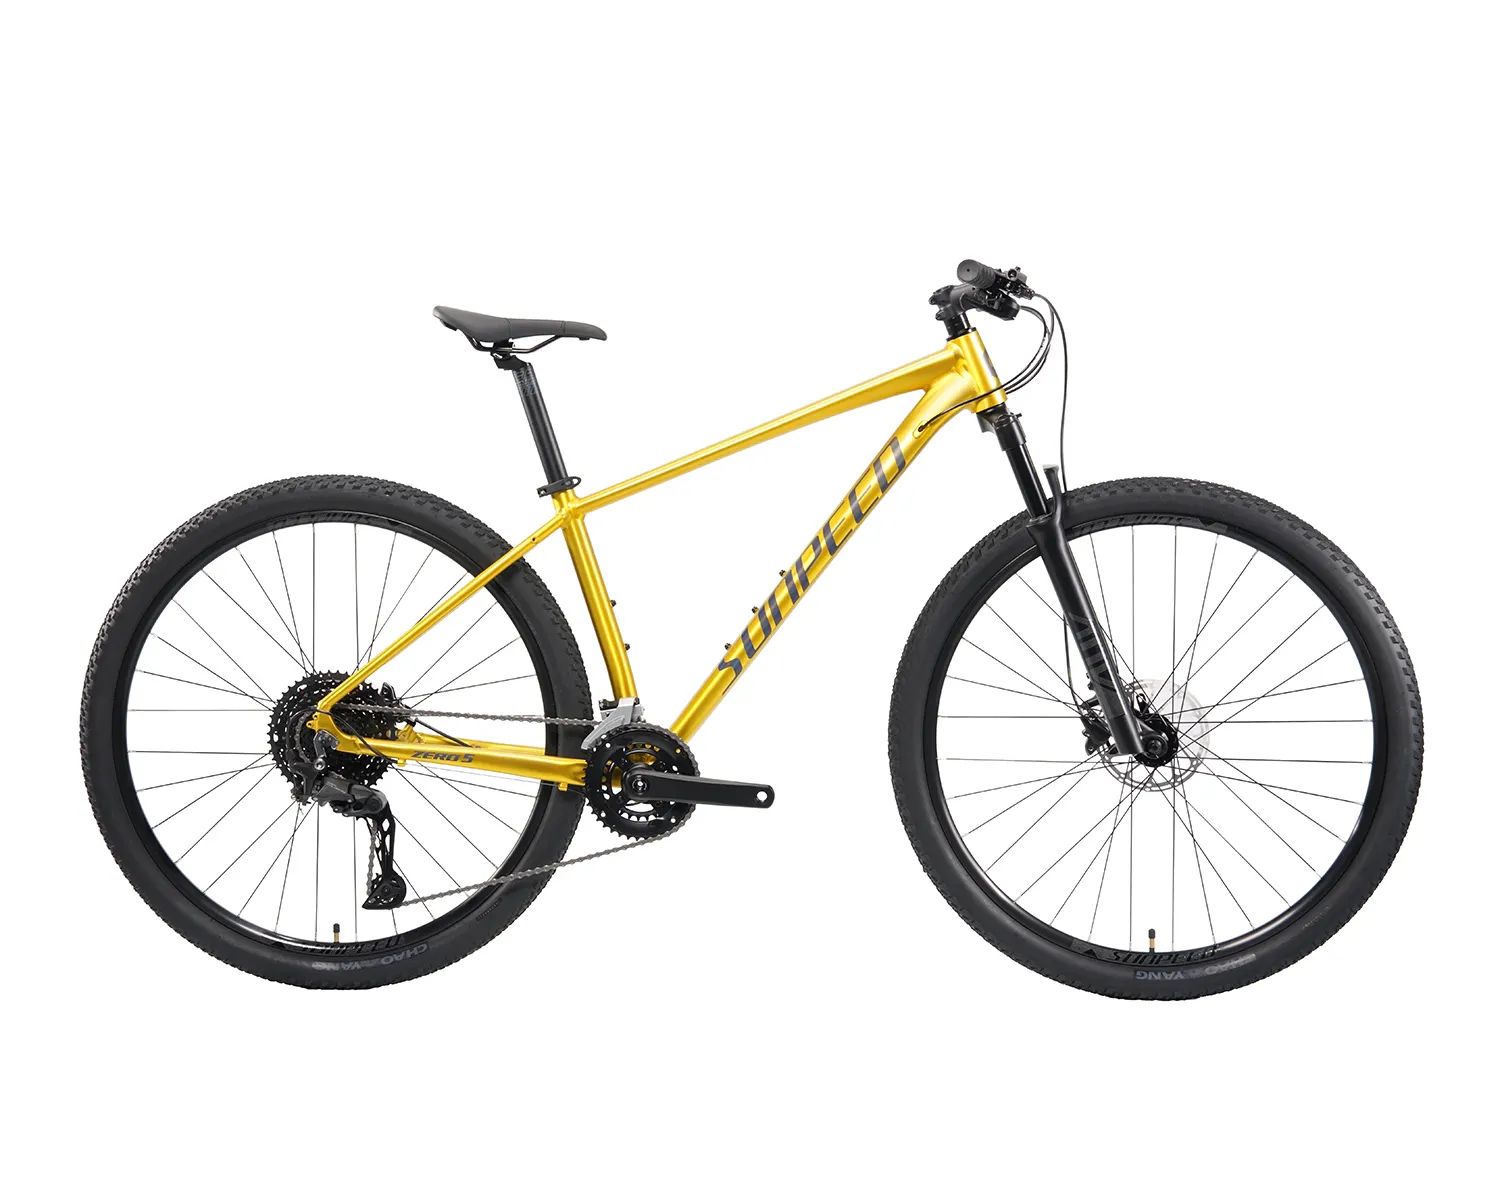 SUNPEED ZERO 5 Alloy bike 2*11 speed bicycle 27.5/29 inch mountain bike with hydraulic disc brake